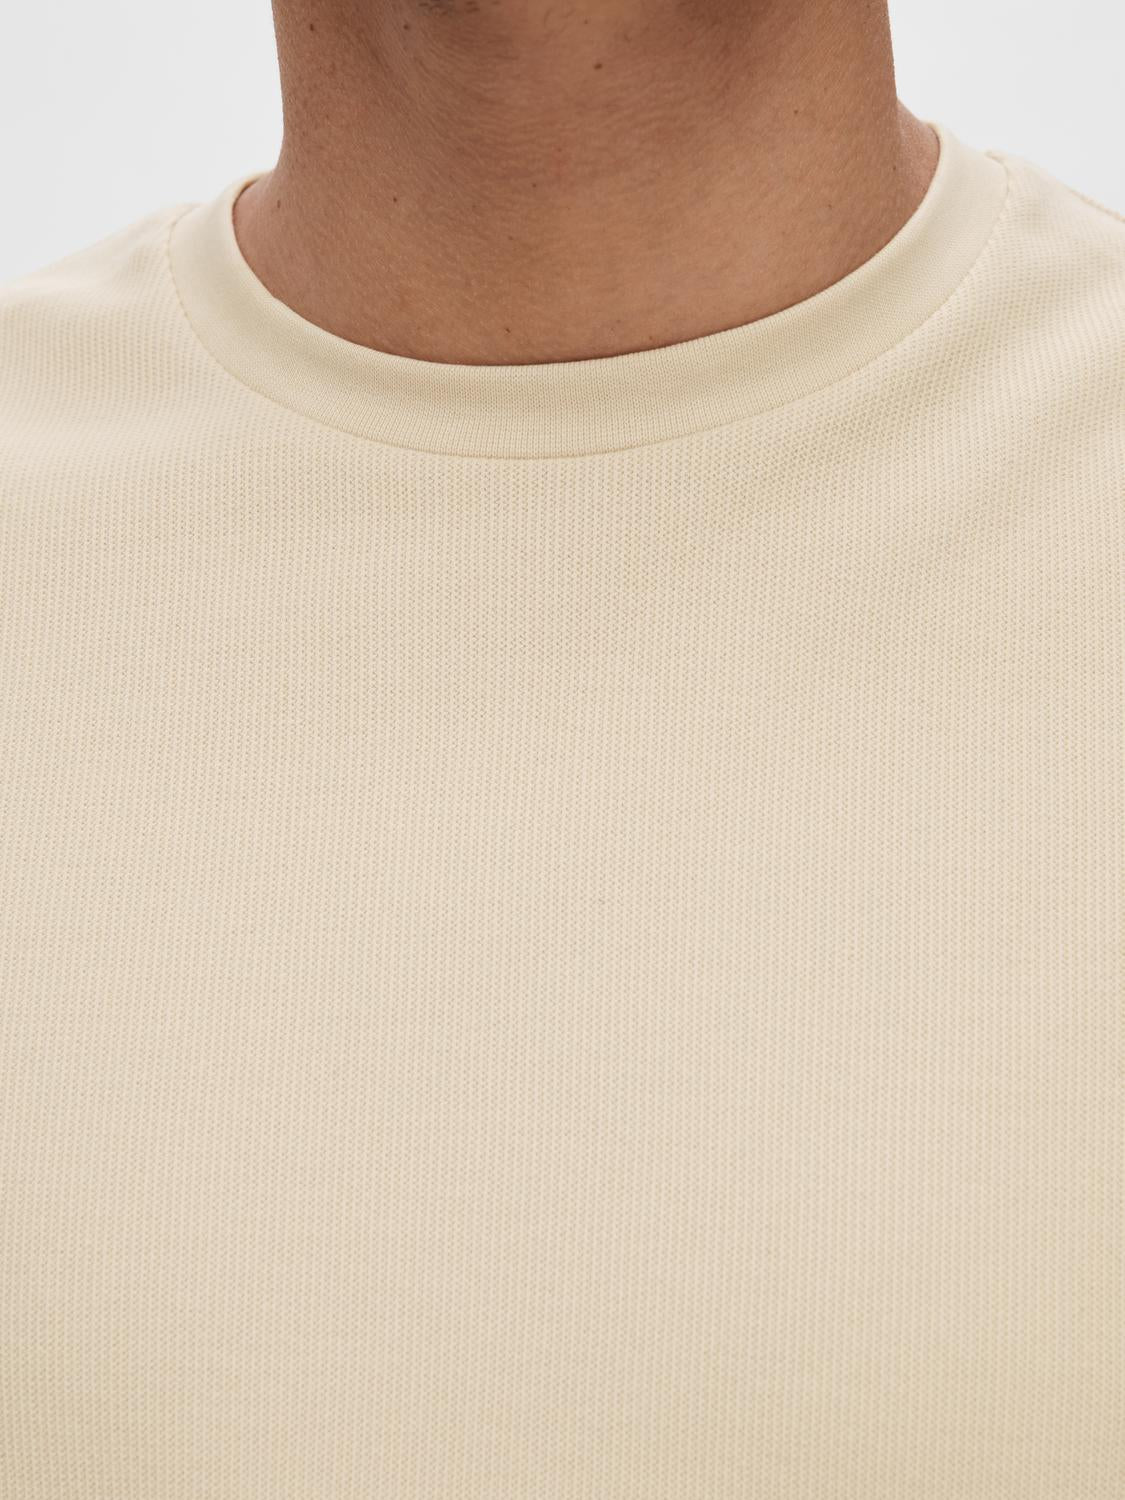 SELECTED HOMME - RELAX WALT WAFFLE T-Shirt - Fog